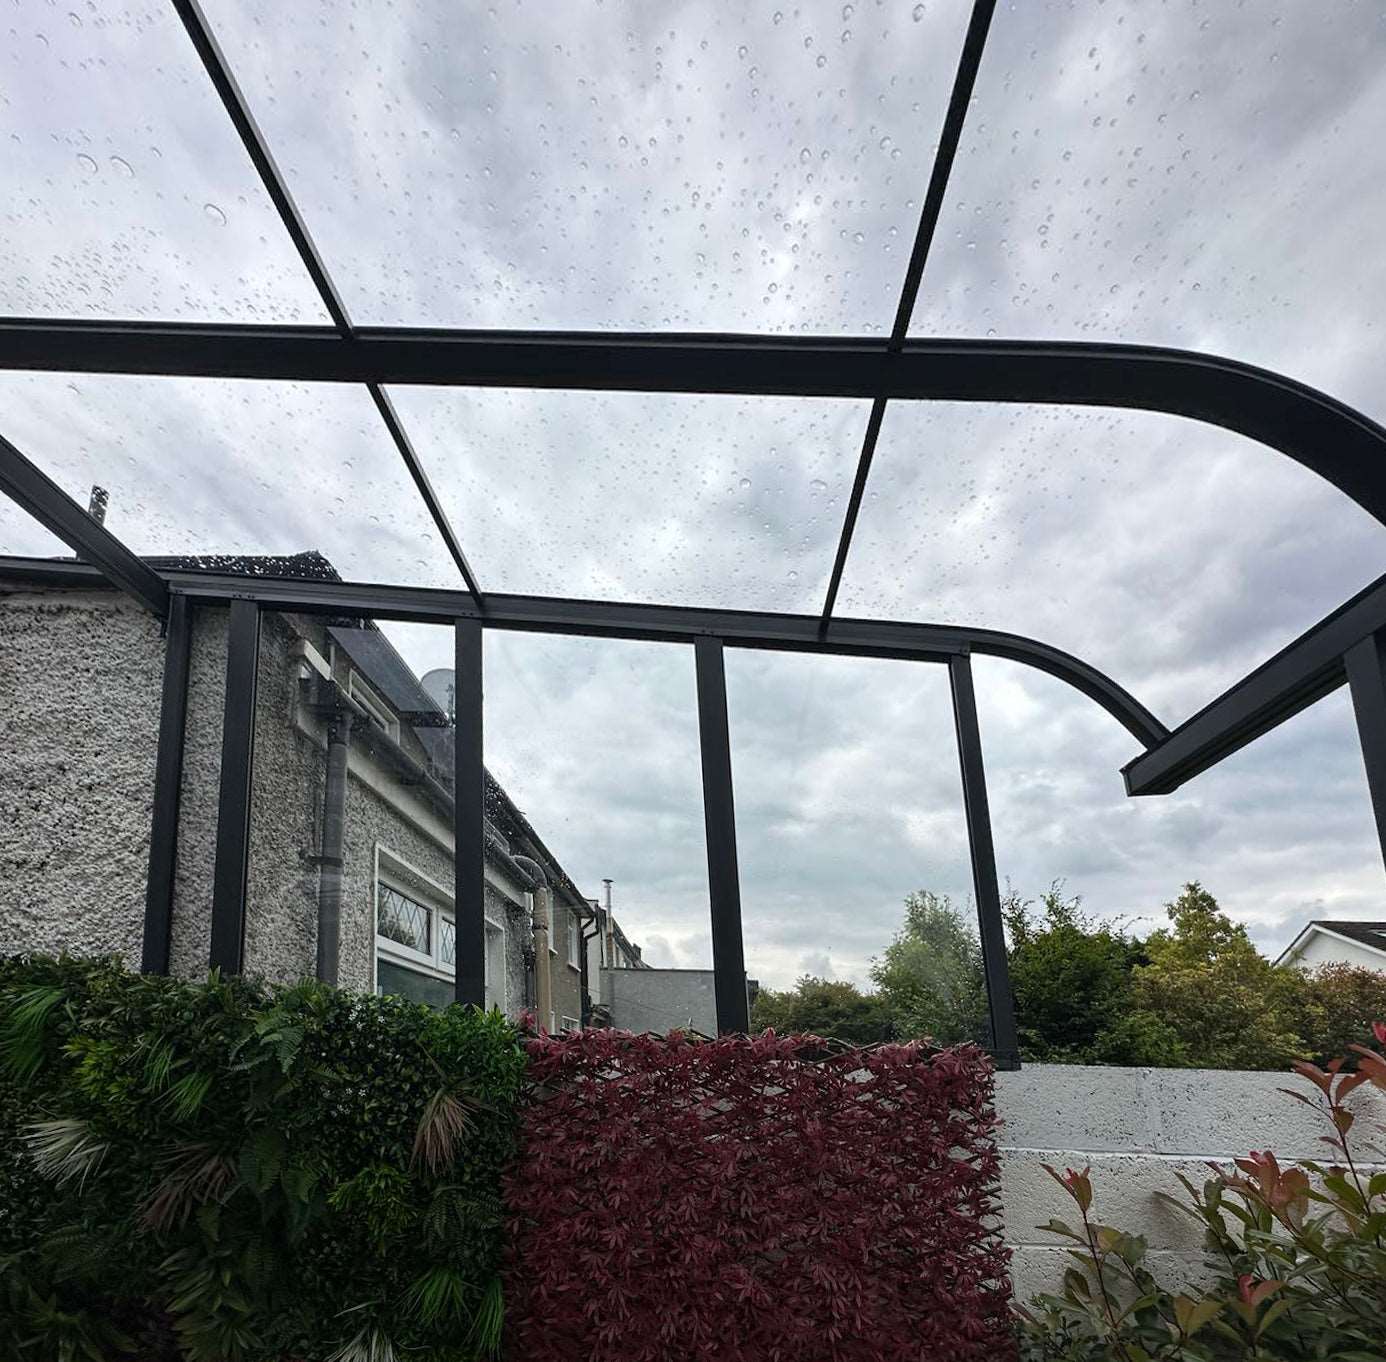 Aluminium canopy manufacturers and installers in Ireland